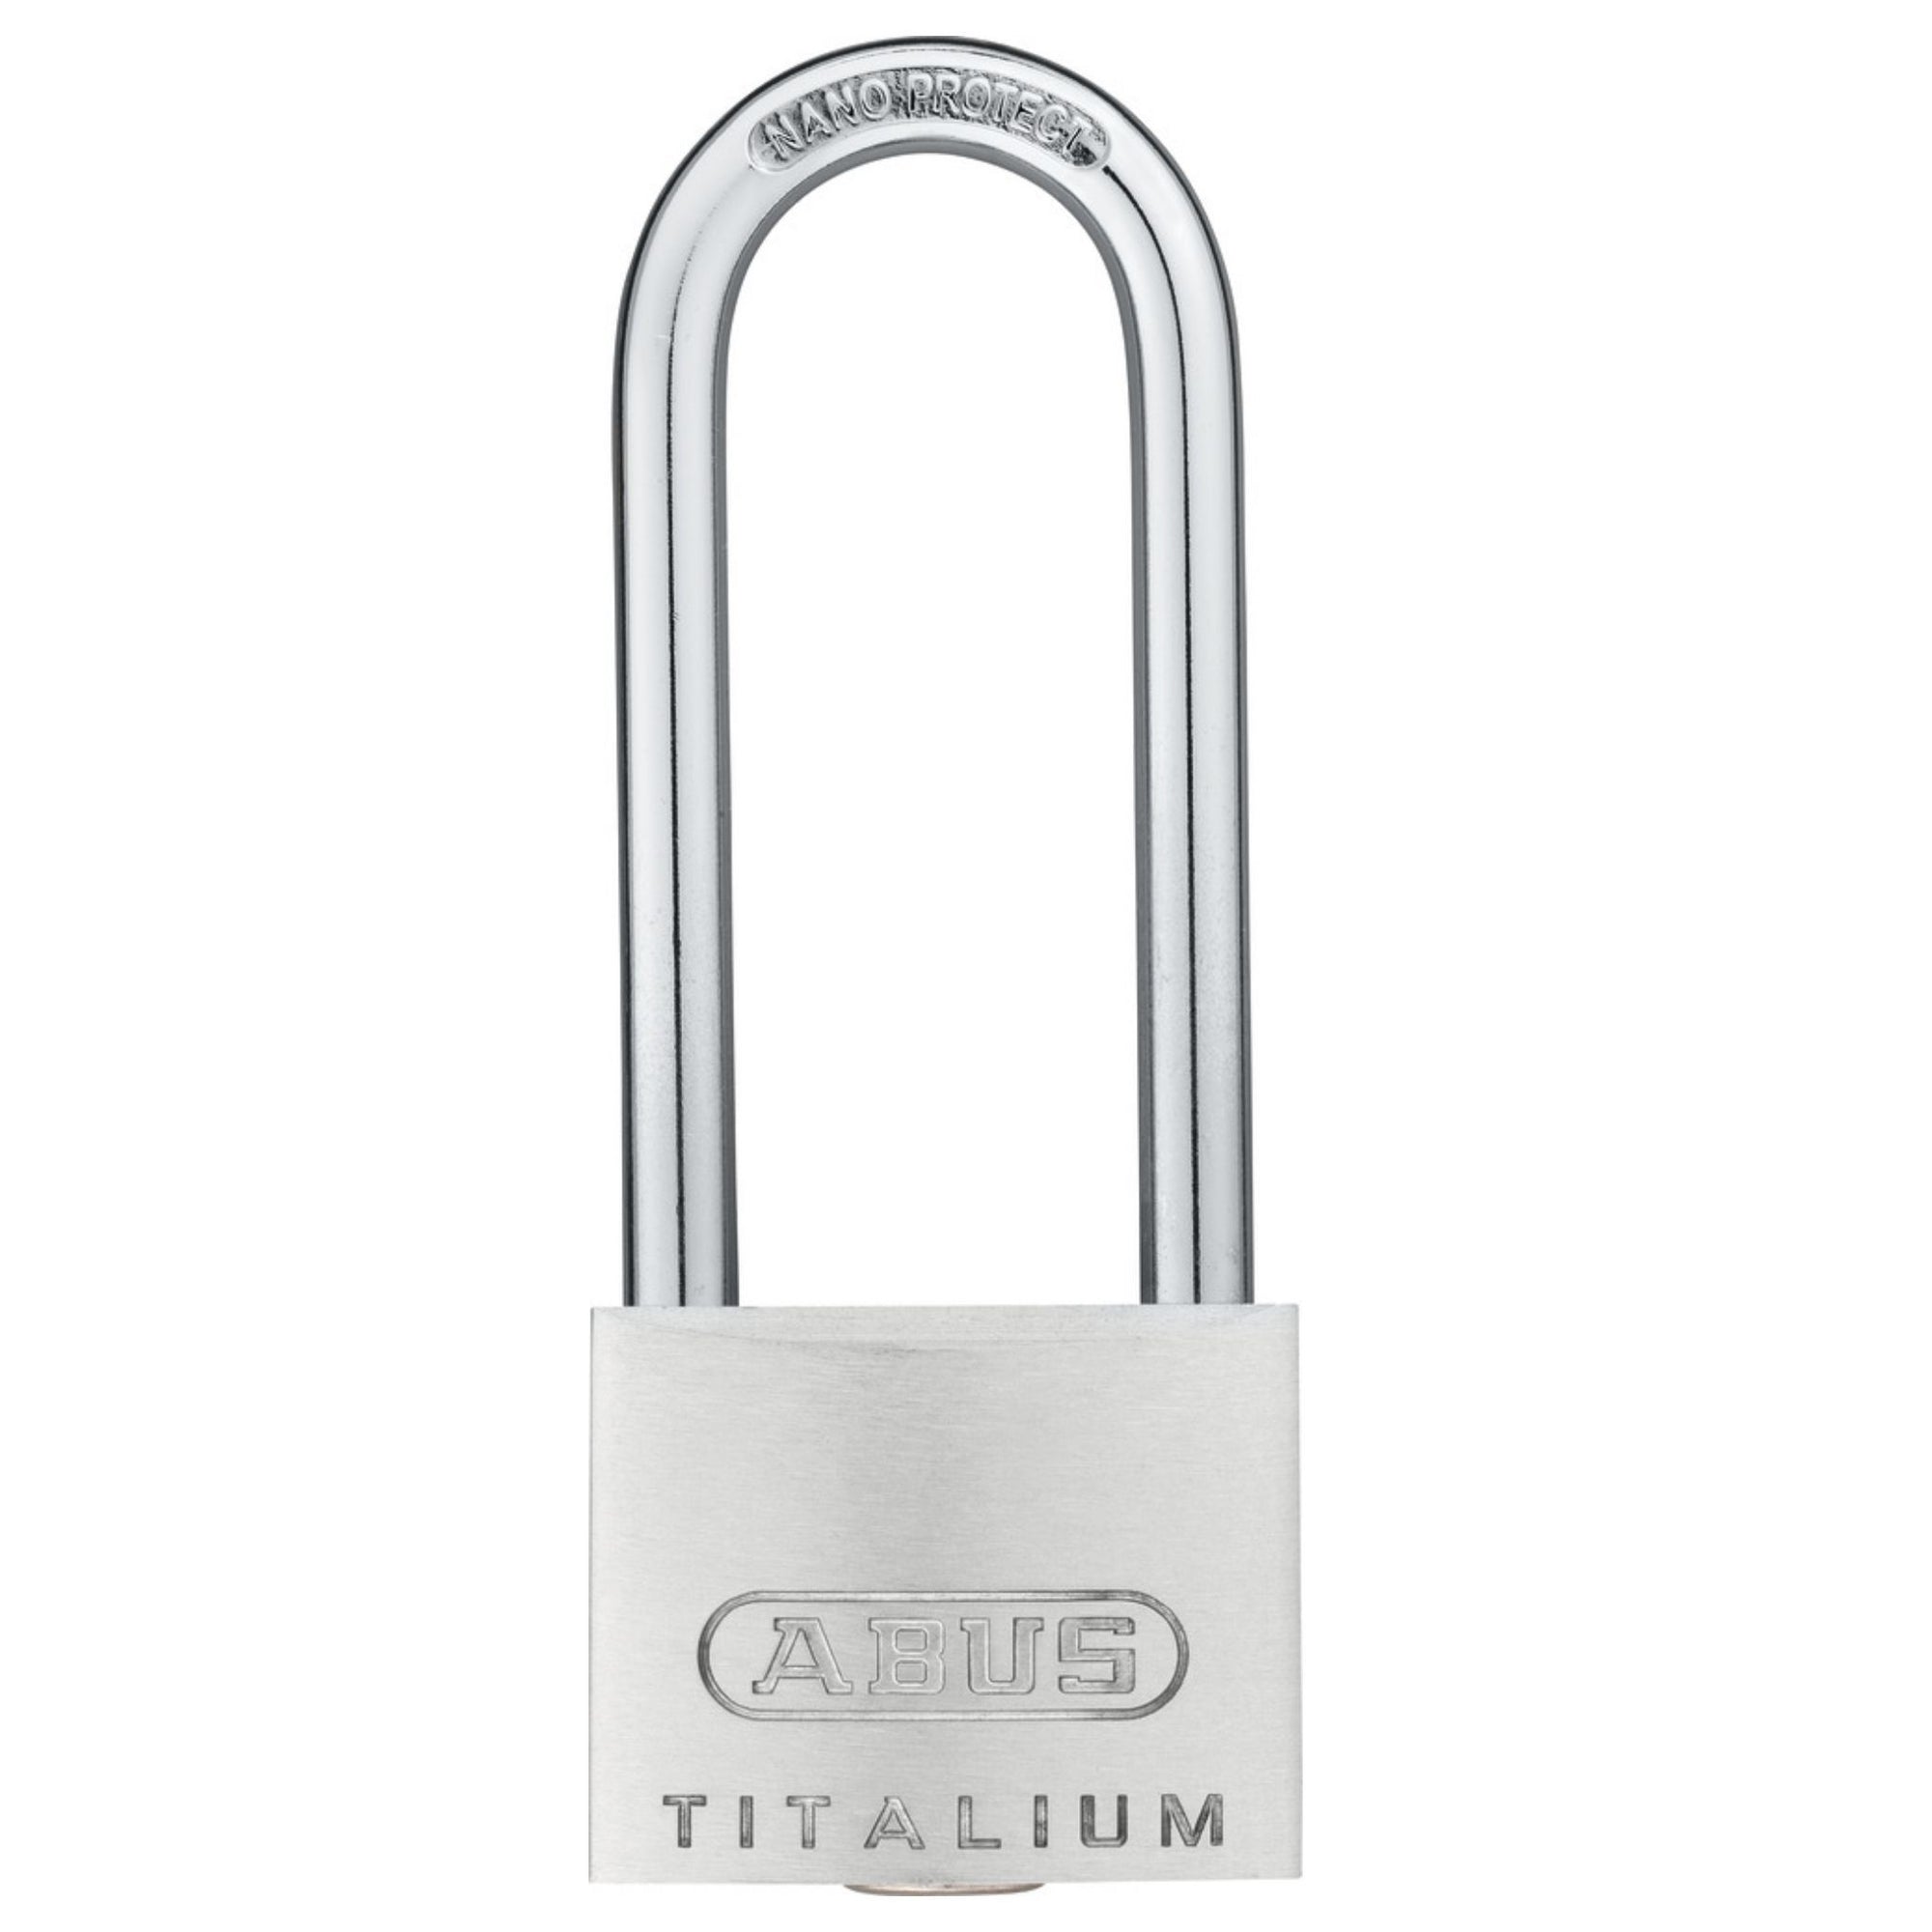 Abus 64TI/40HB63 KA 6412 Titalium Padlocks with 2-31/64" Shackle Keyed Alike to Match Key Number KA6412 - The Lock Source